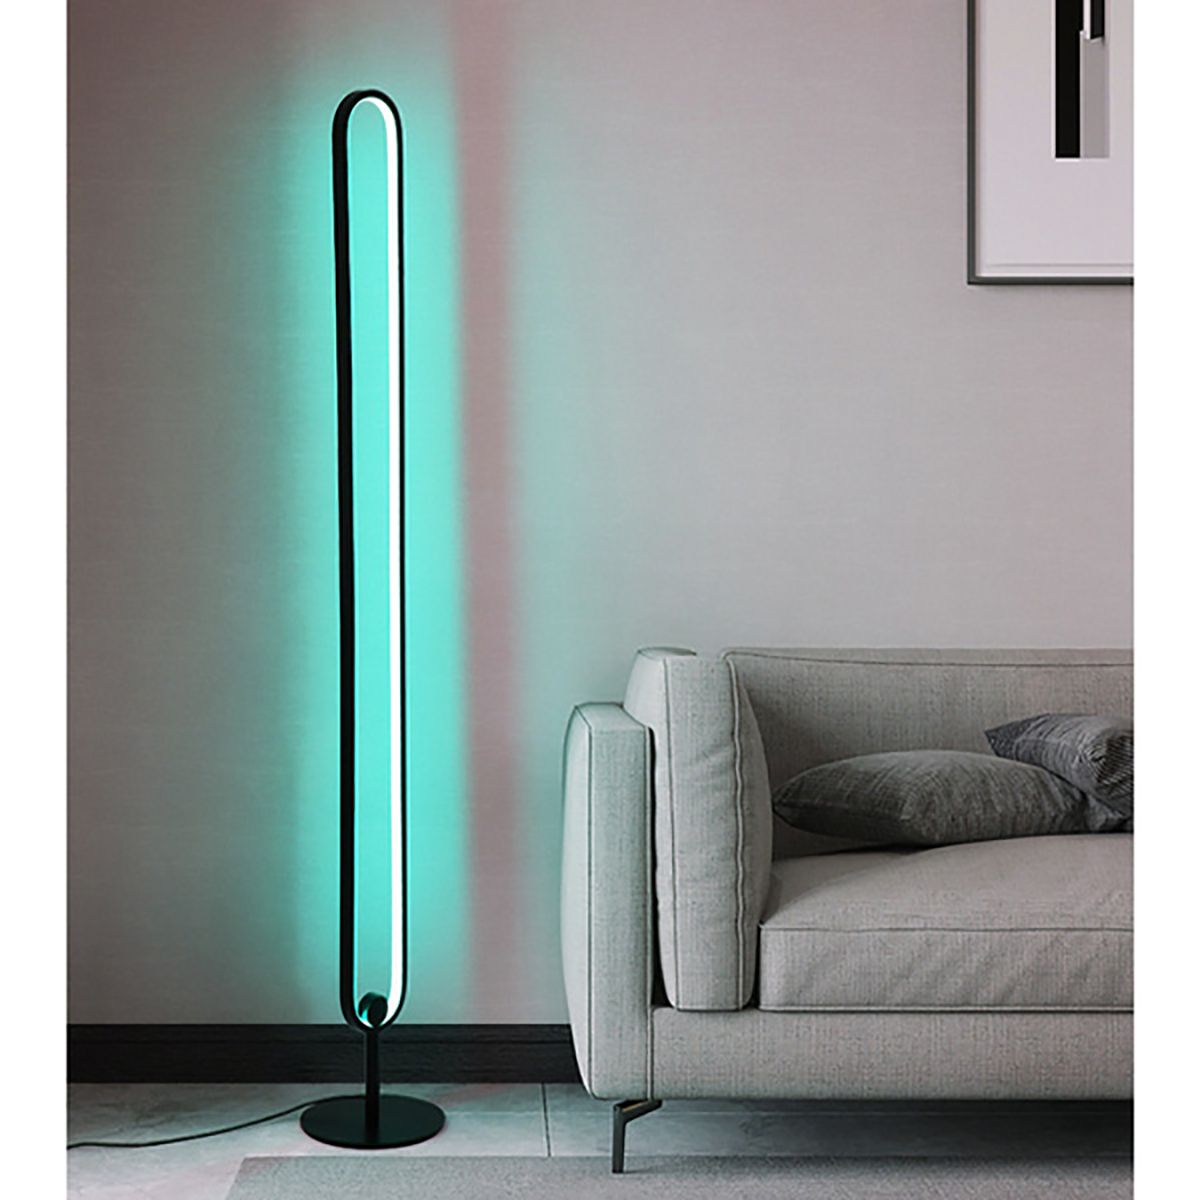 Find Modern Corner Floor Lamp Indoor Living Room Bedroom Dimming RGB Light Live Fill Lights for Sale on Gipsybee.com with cryptocurrencies